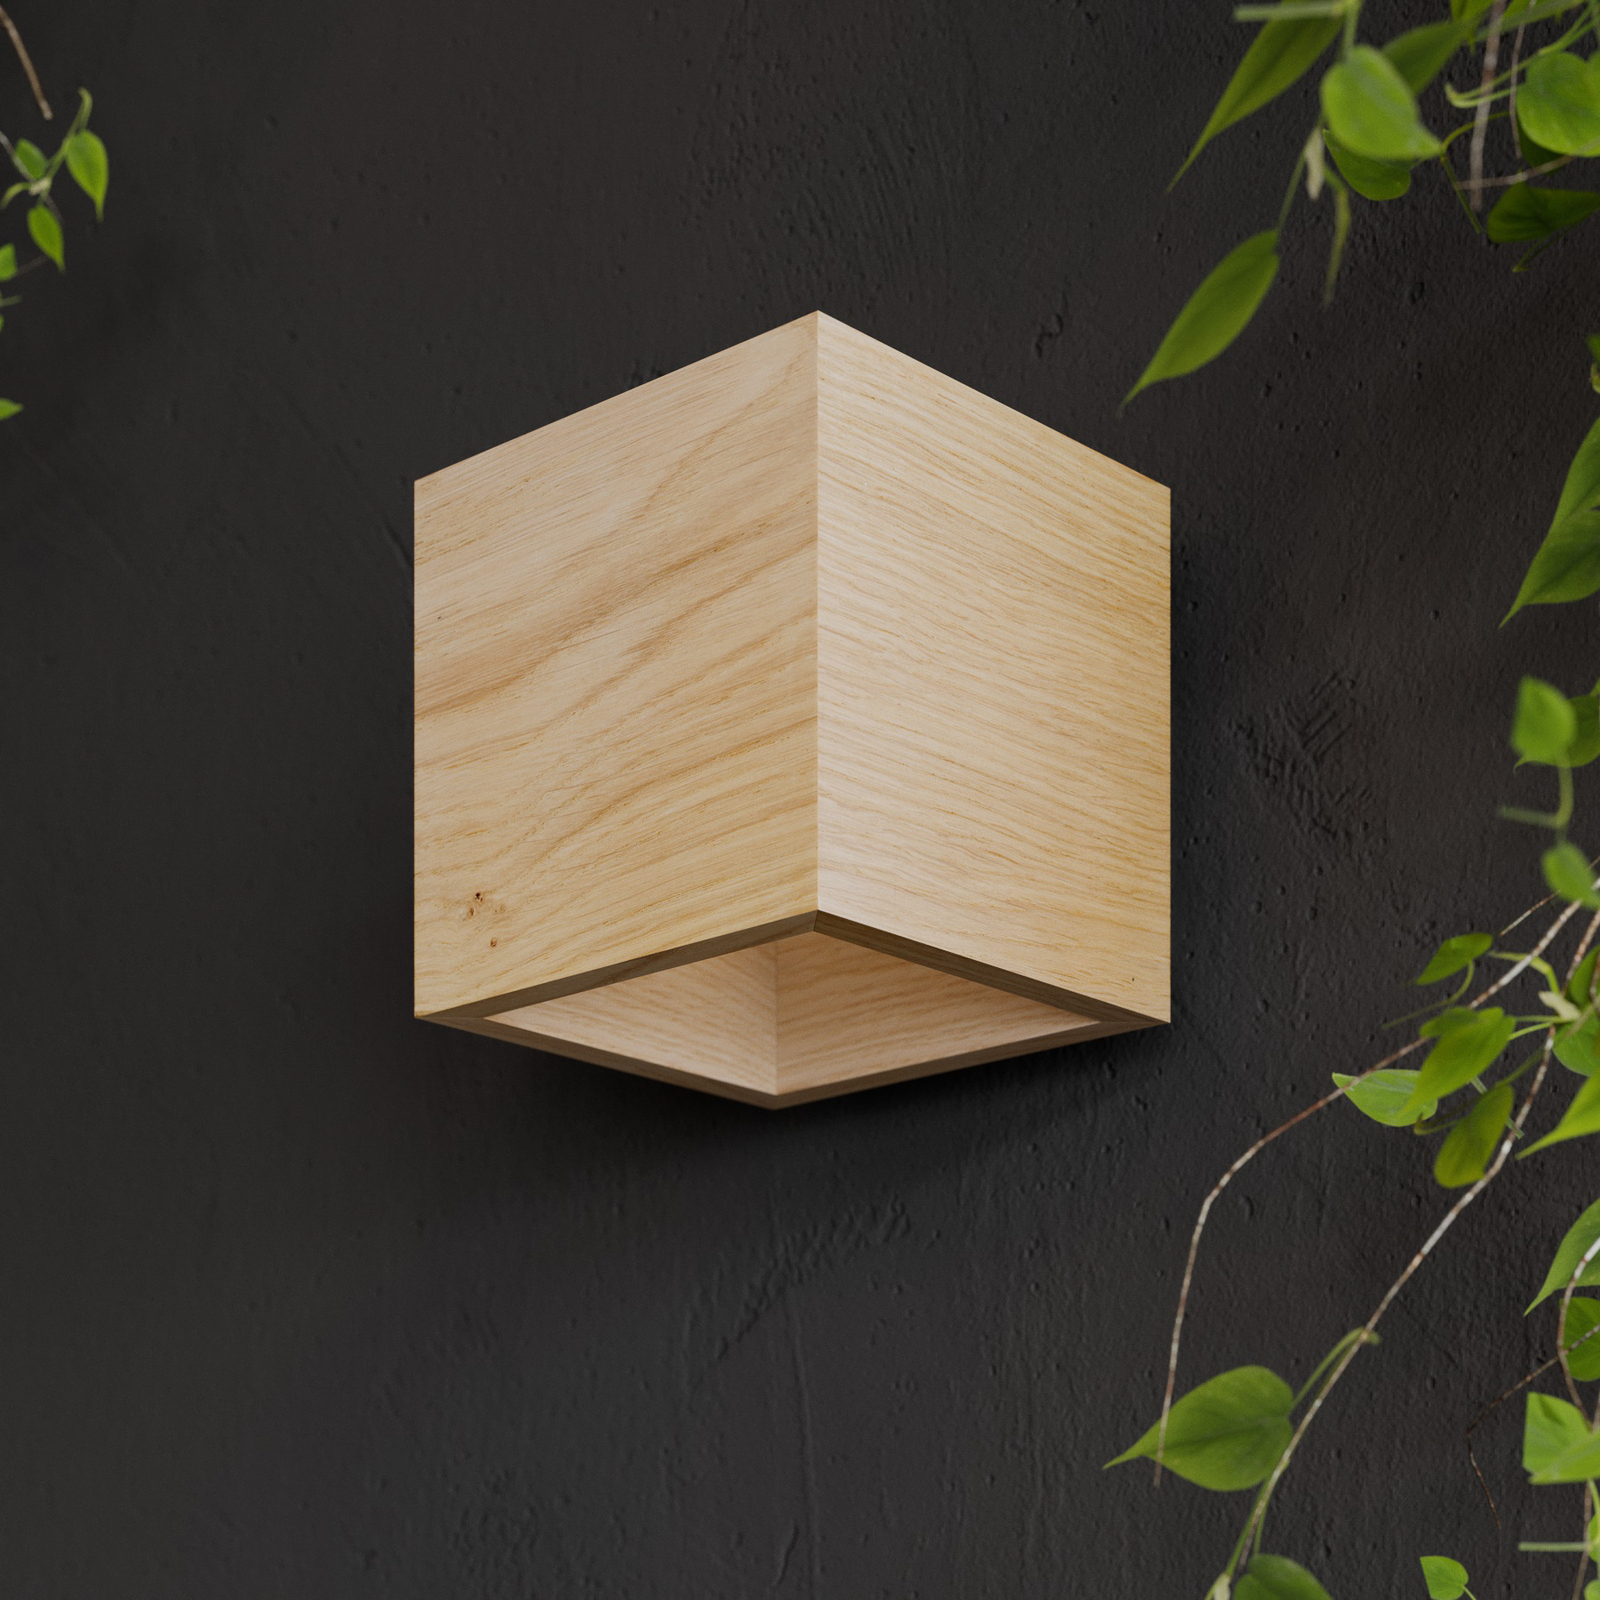 Envostar Urba wall light made of oak wood